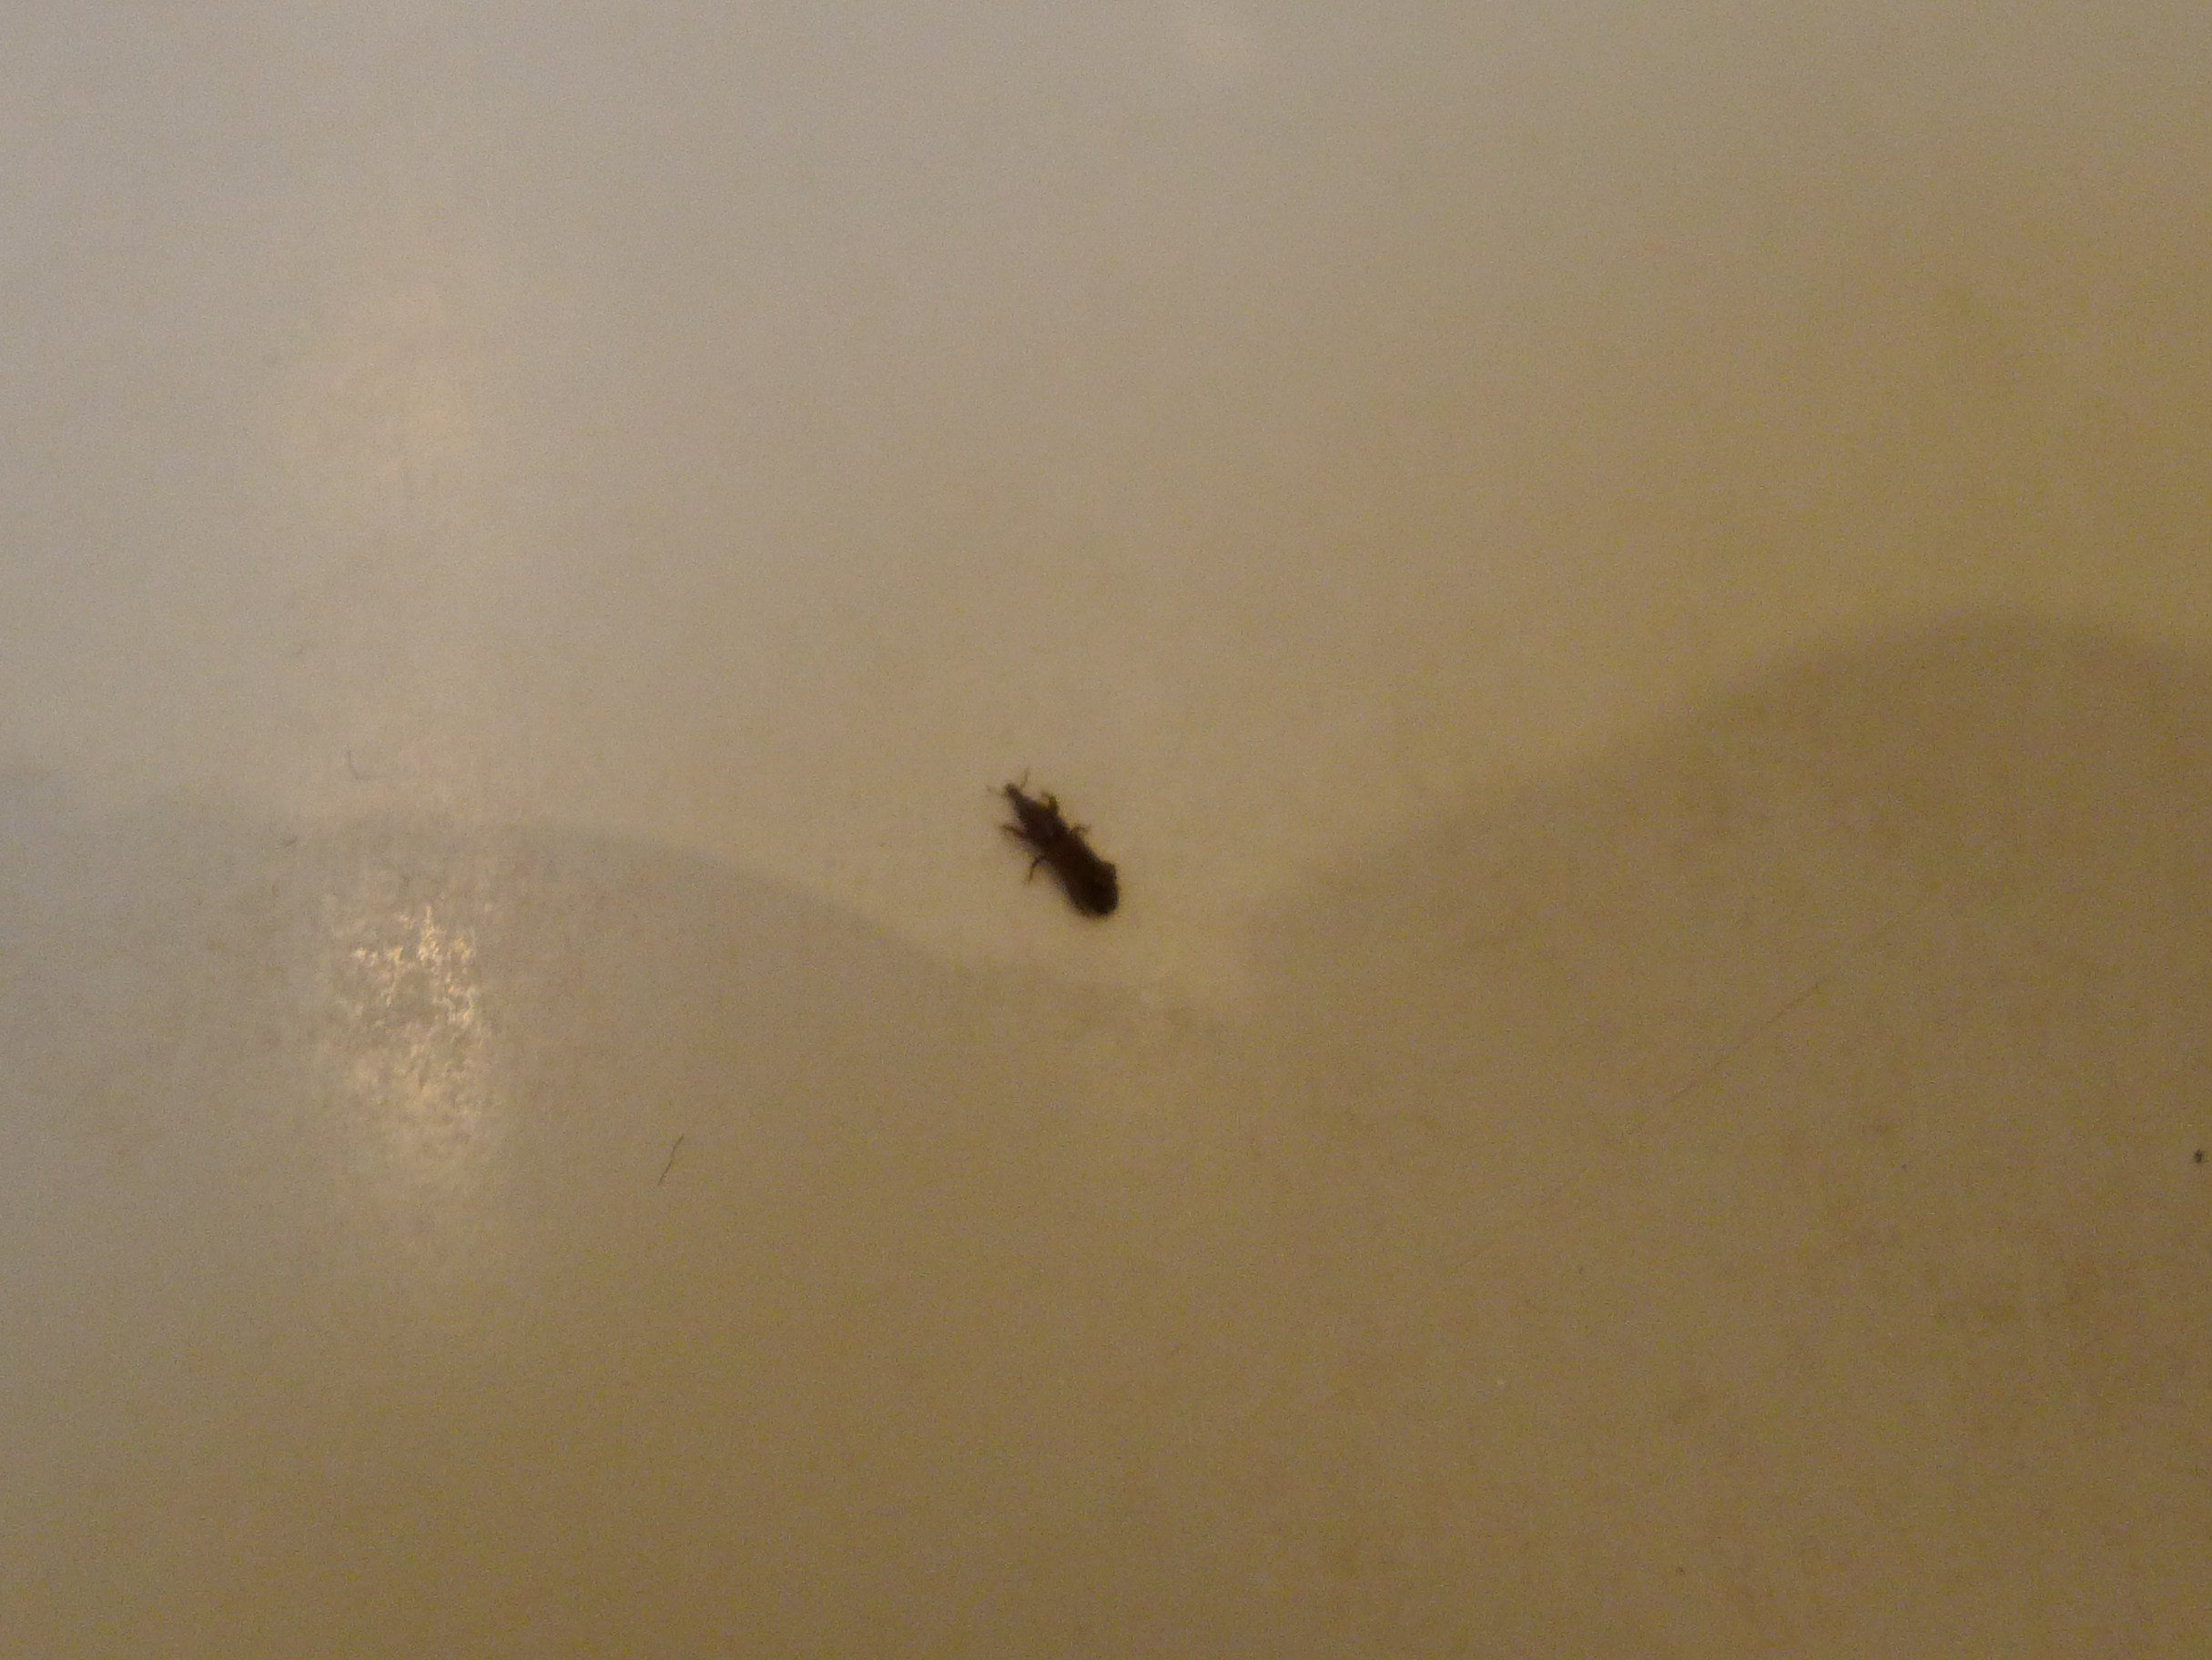 Small Black Flies In Bathroom
 Getting Rid Get Rid Springtails In Tub bedbugs